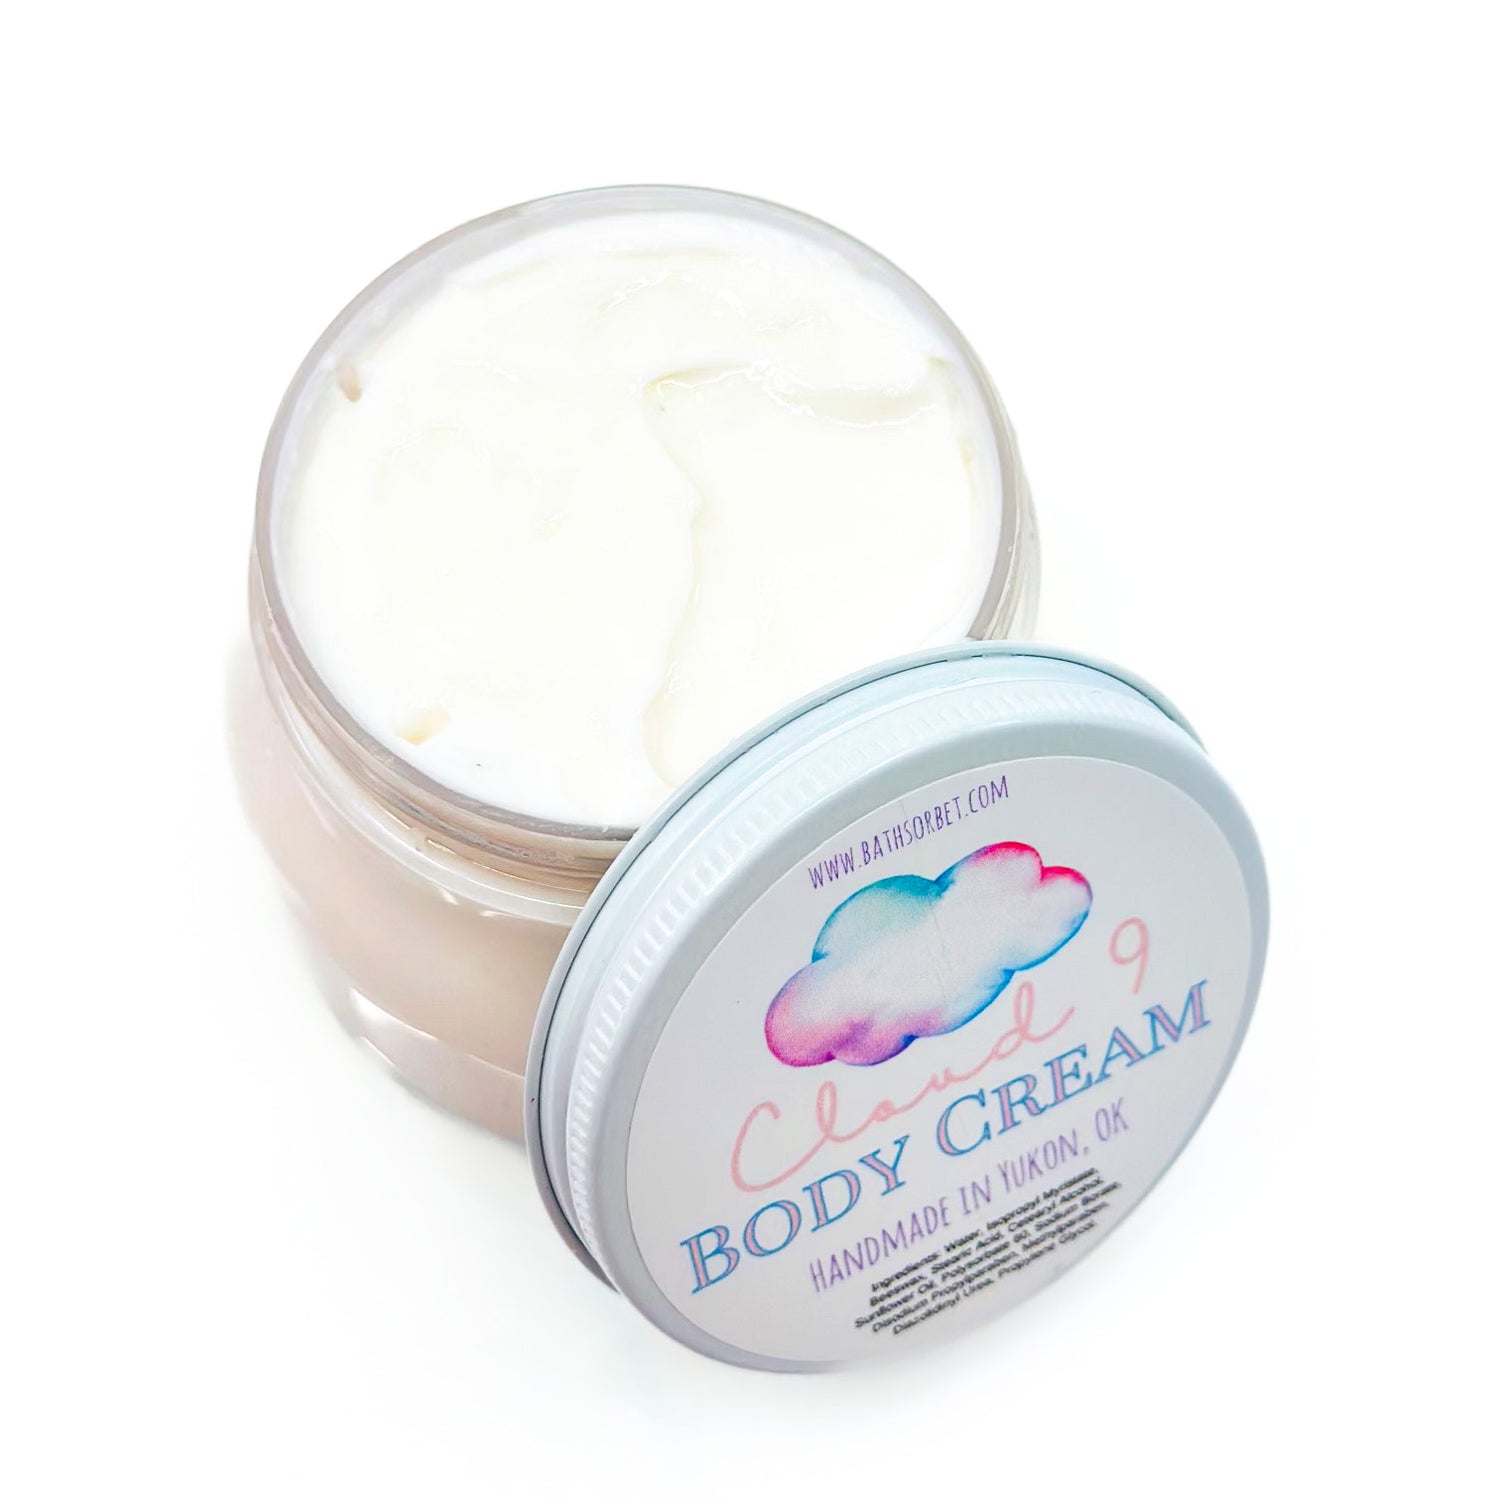 Cloud 9 Body Cream